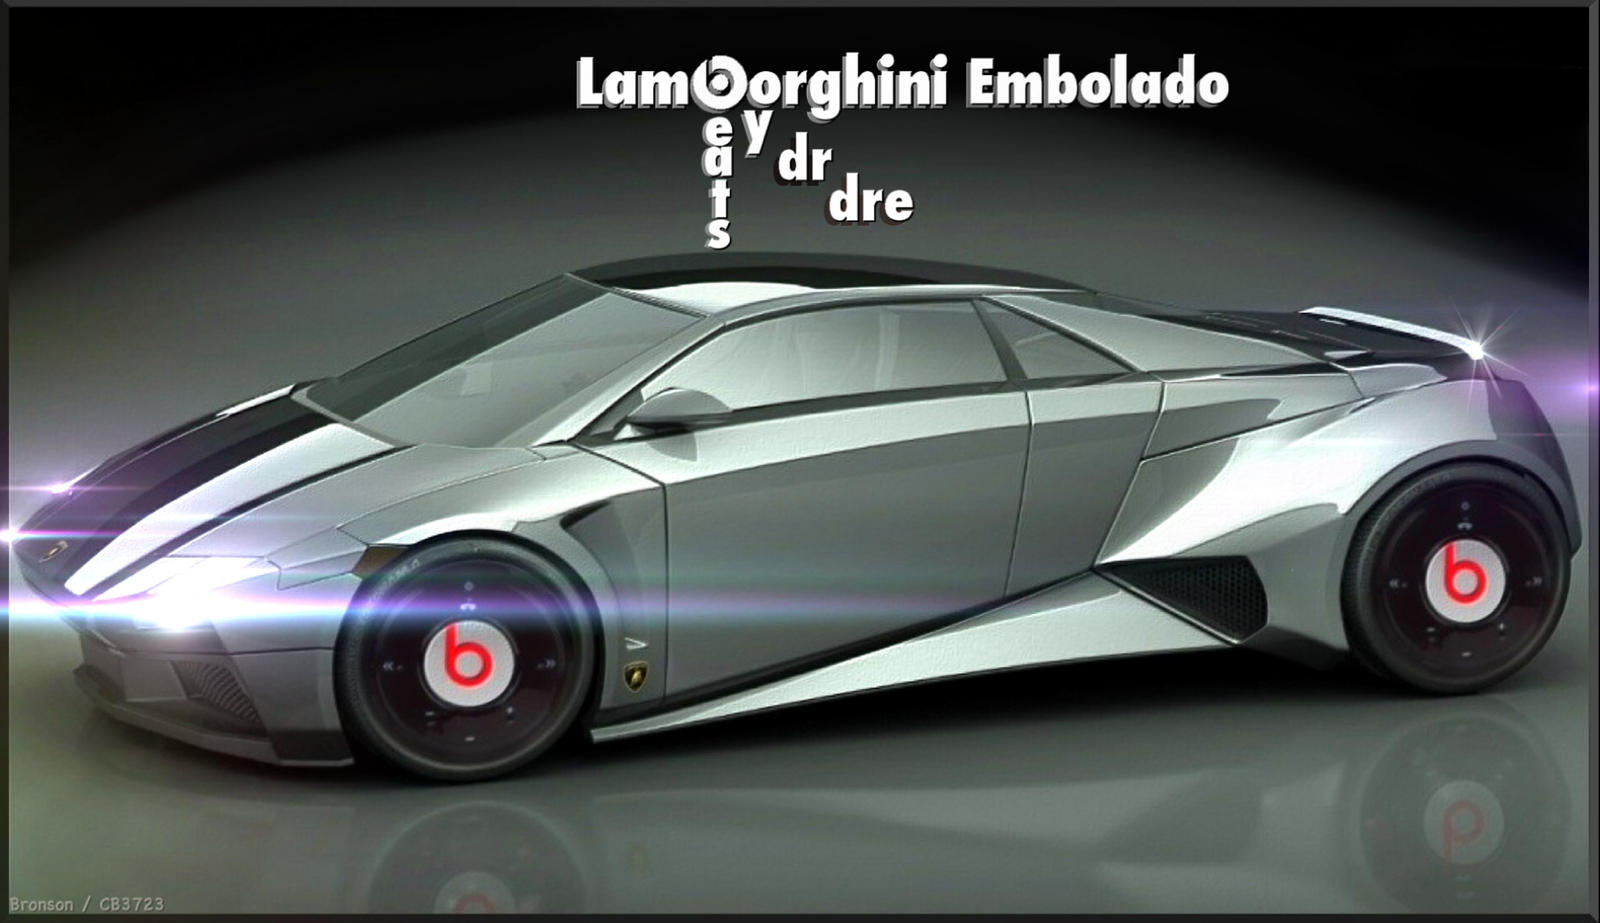 beats by dr dre V Lamborghini Embolado